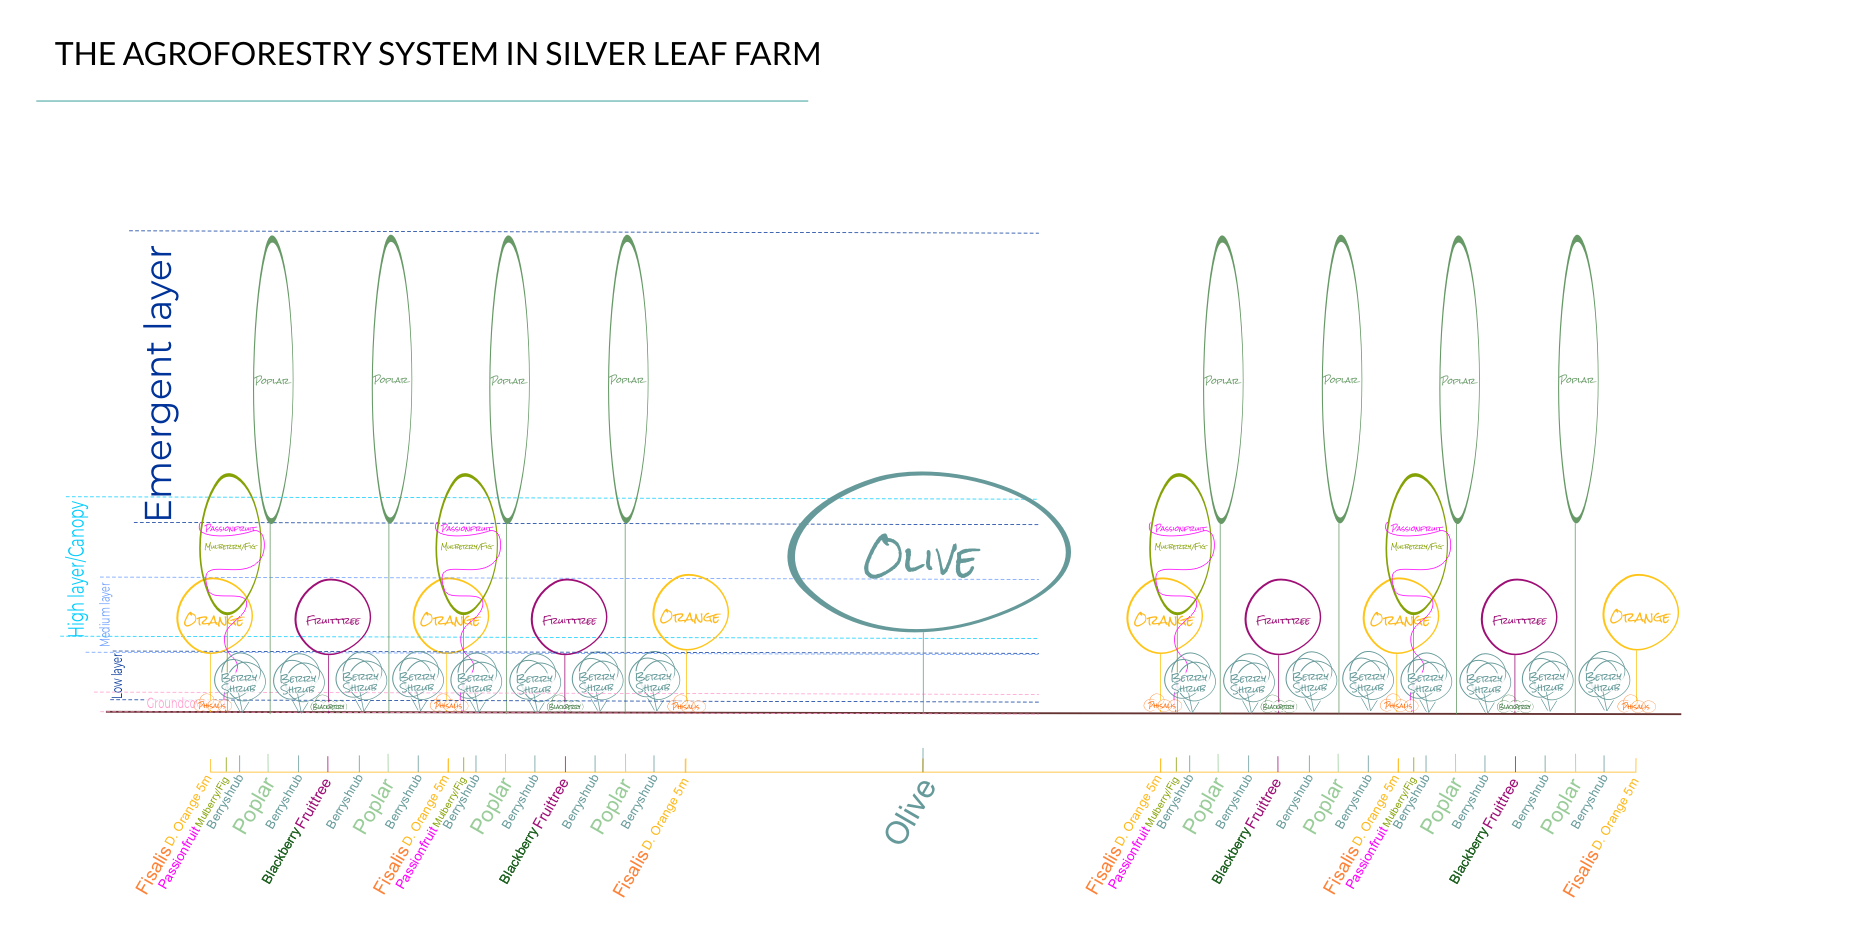 The agroforestry system in silver leaf farm